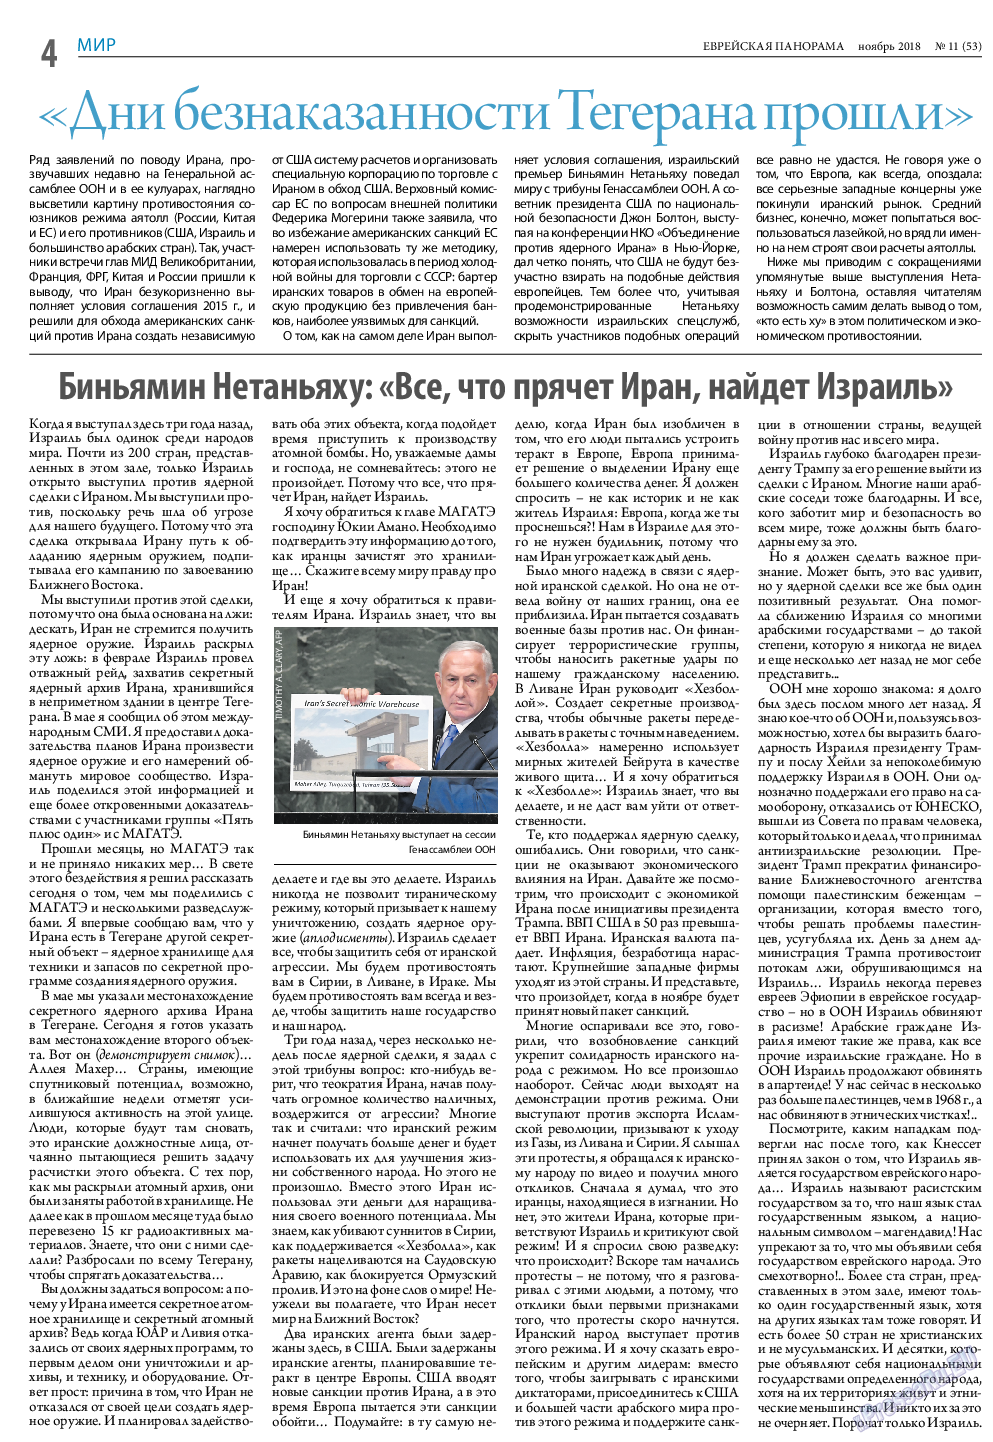 Еврейская панорама, газета. 2018 №11 стр.4